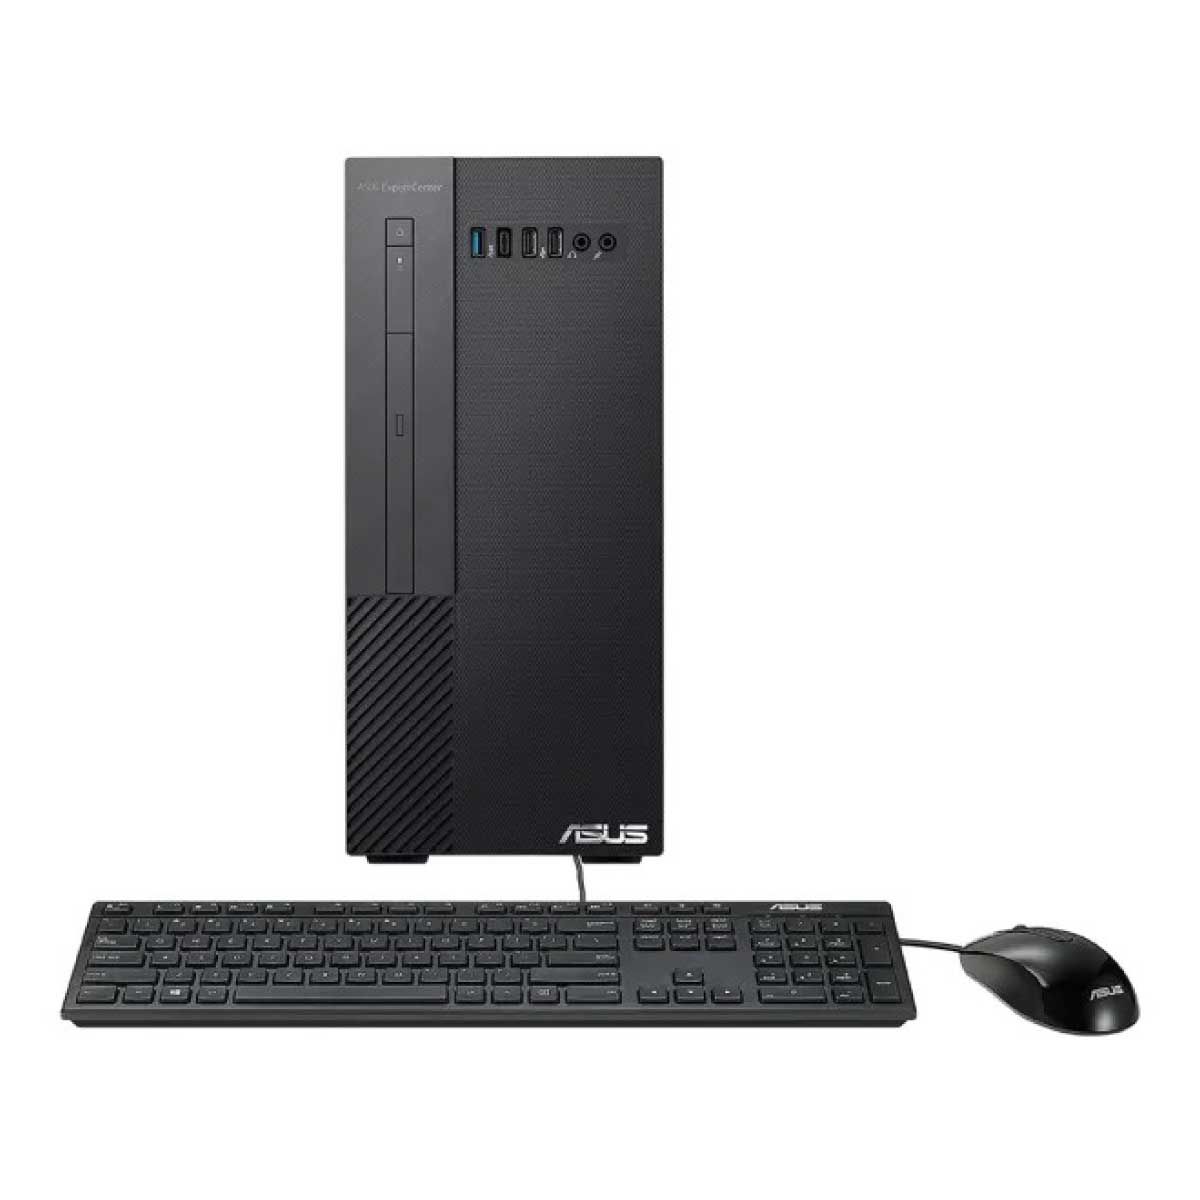 DESKTOP PC (คอมพิวเตอร์ตั้งโต๊ะ) ASUS U500MA-R4600G032W